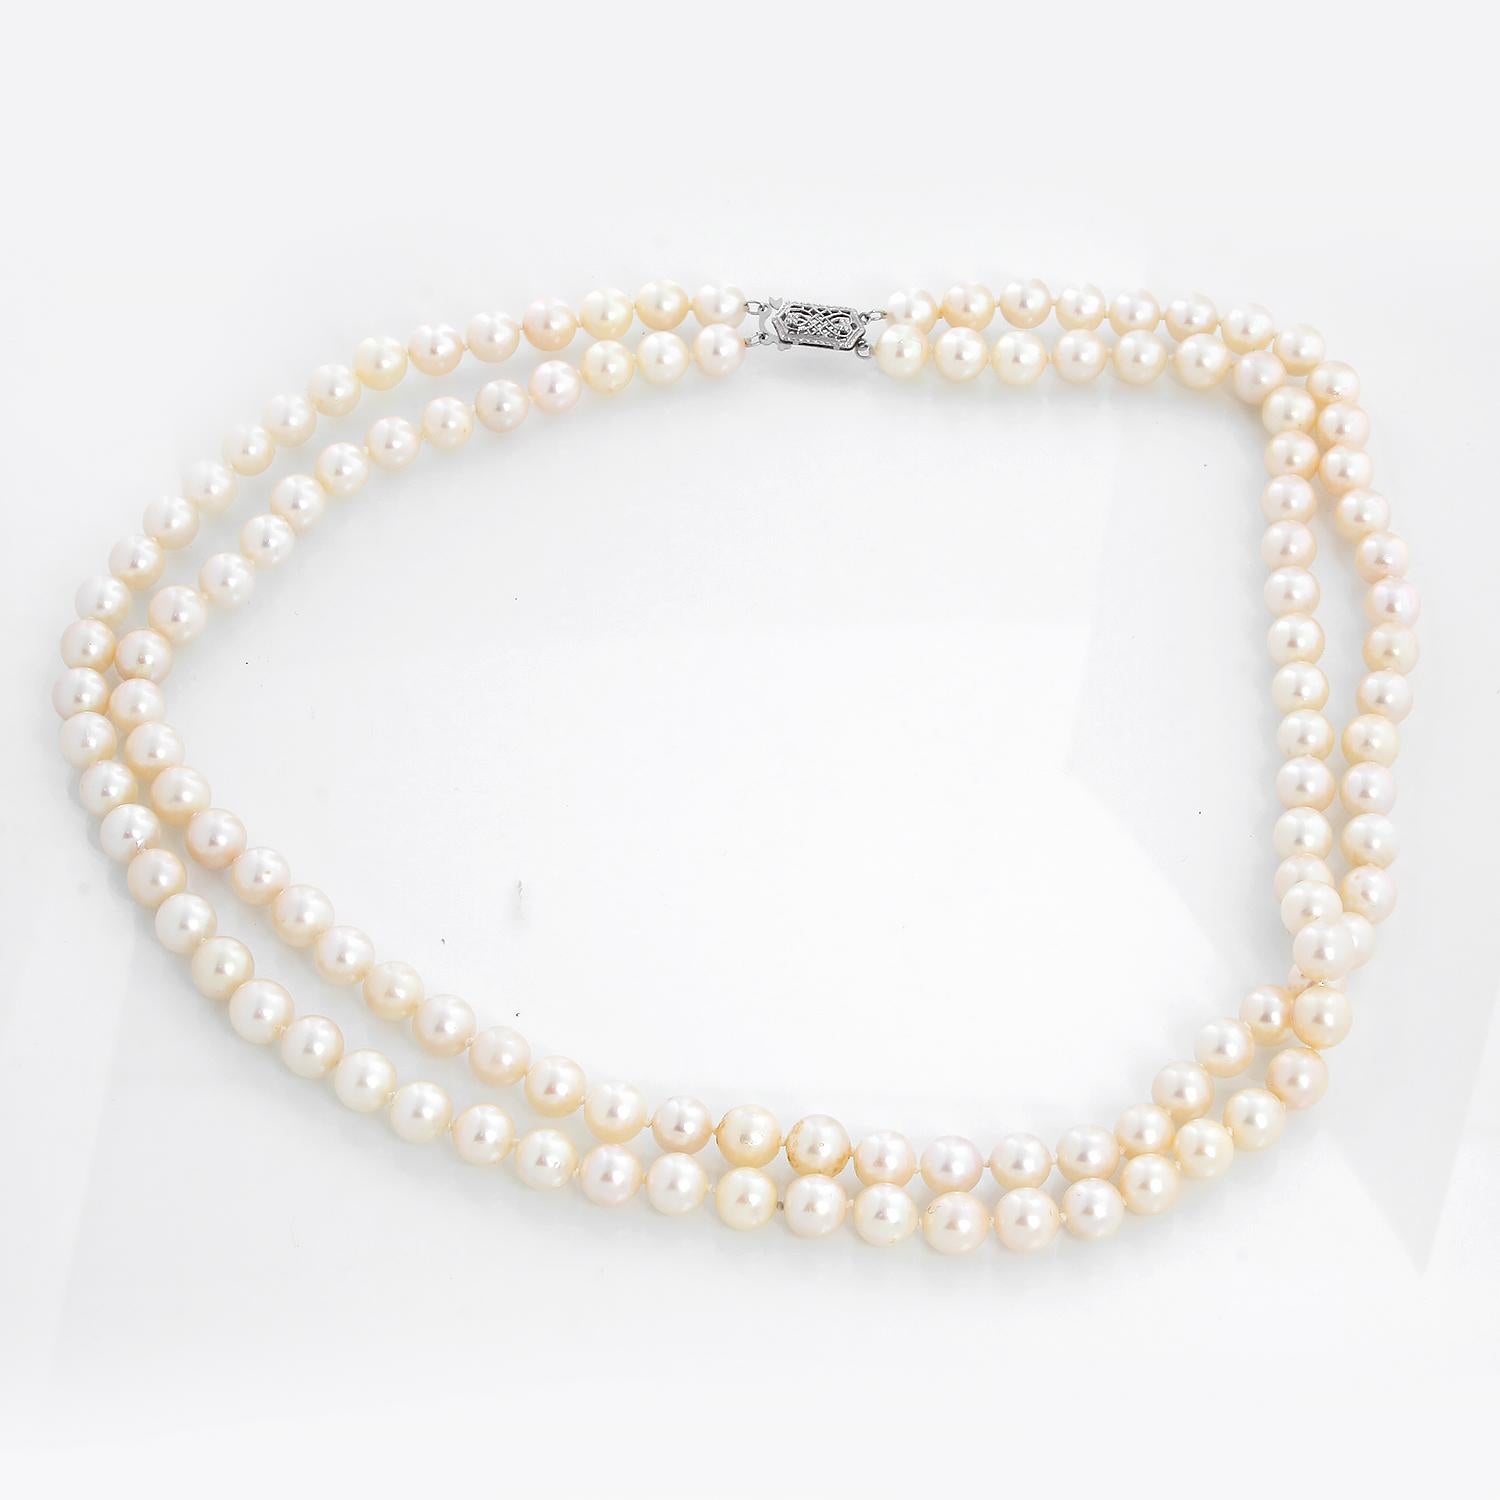 Double Strand Salt Water Pearl Necklace & Bracelet For Sale 2